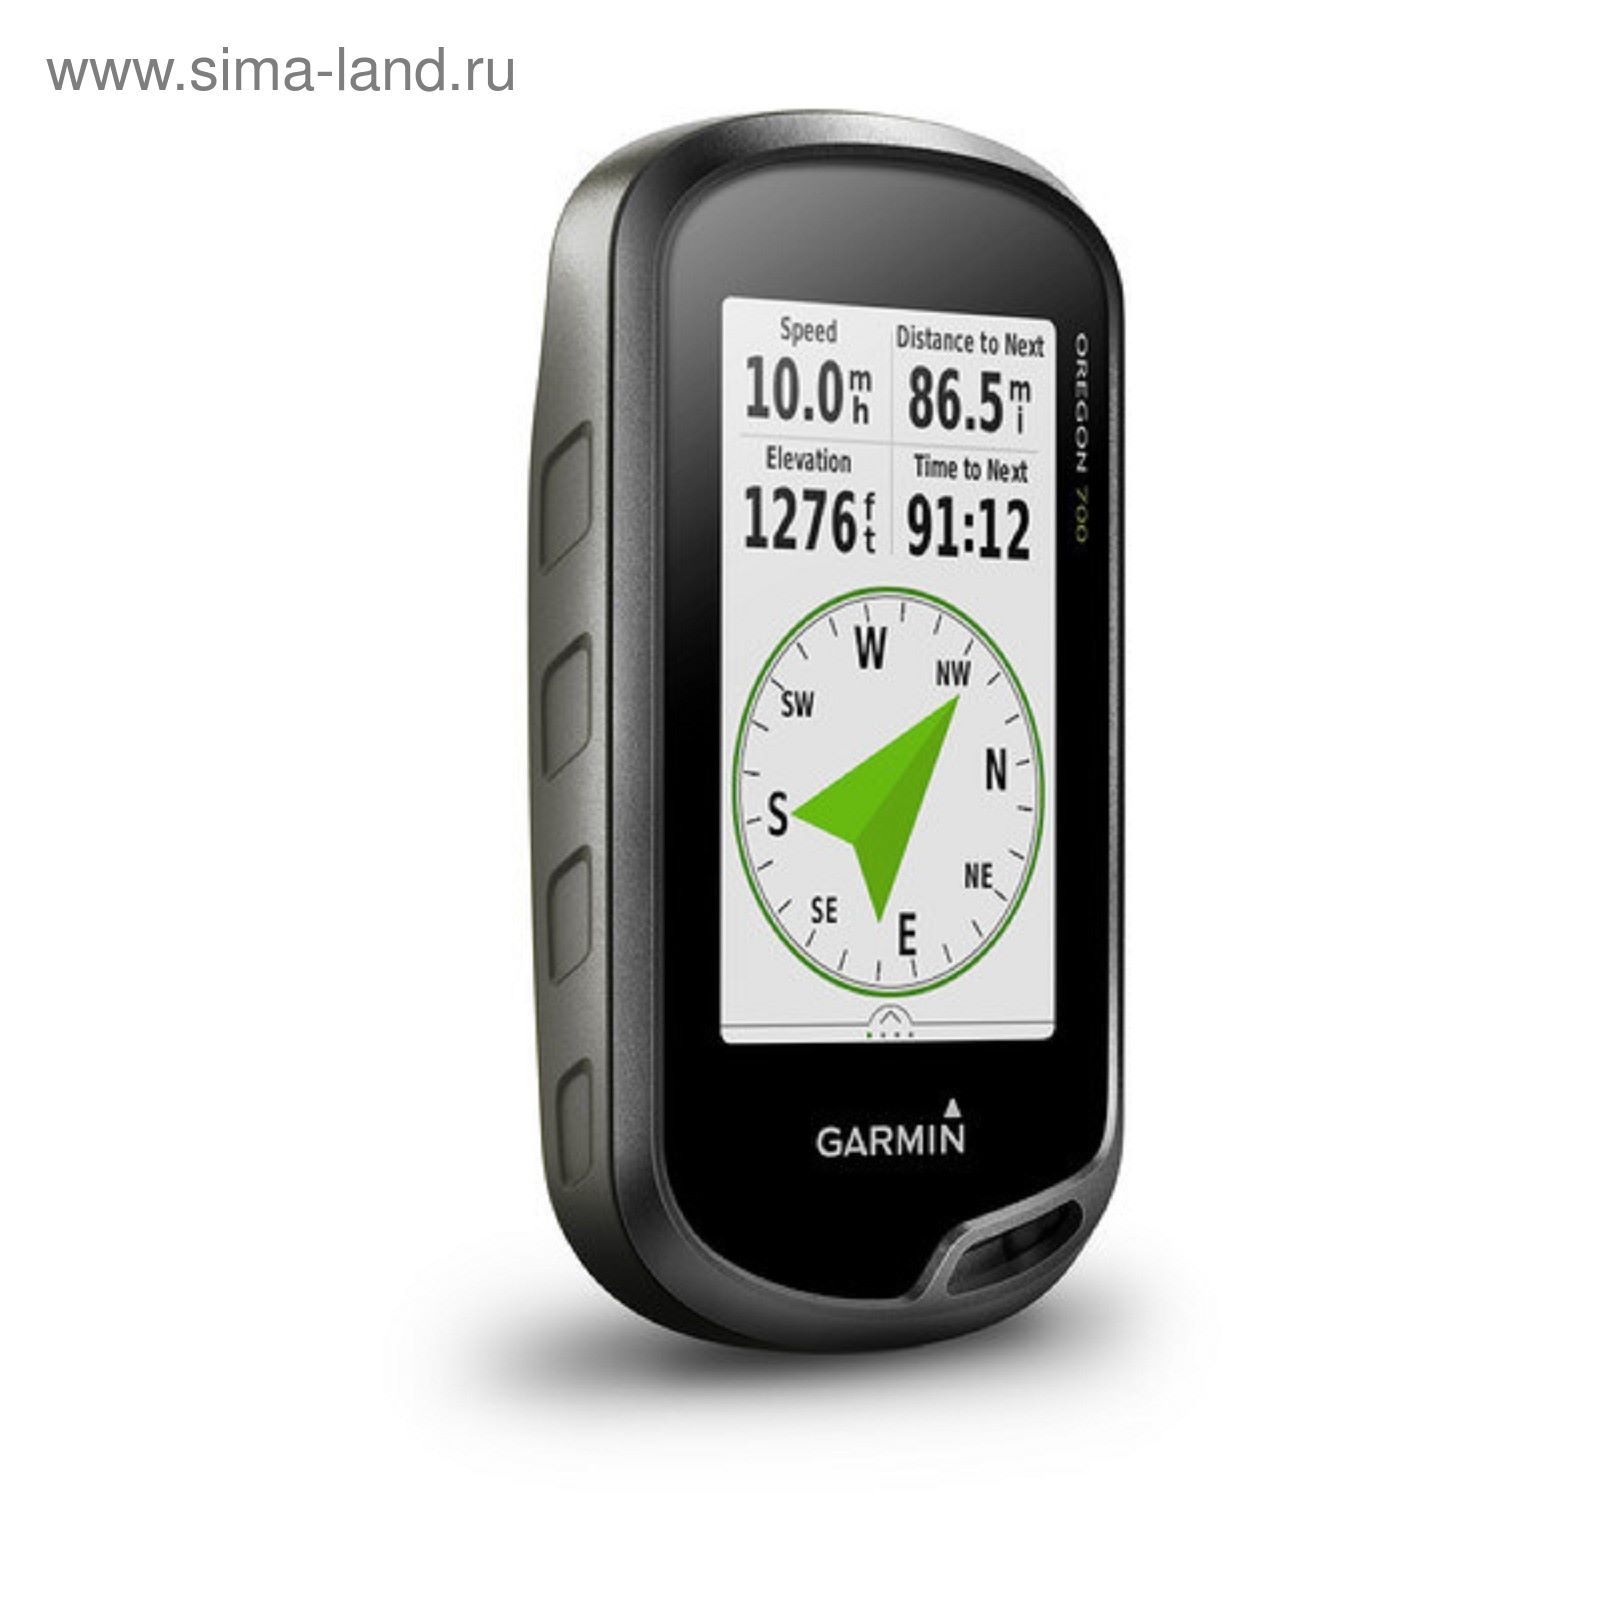 GPS-навигатор Garmin Oregon 750t,GPS, Дороги РФ